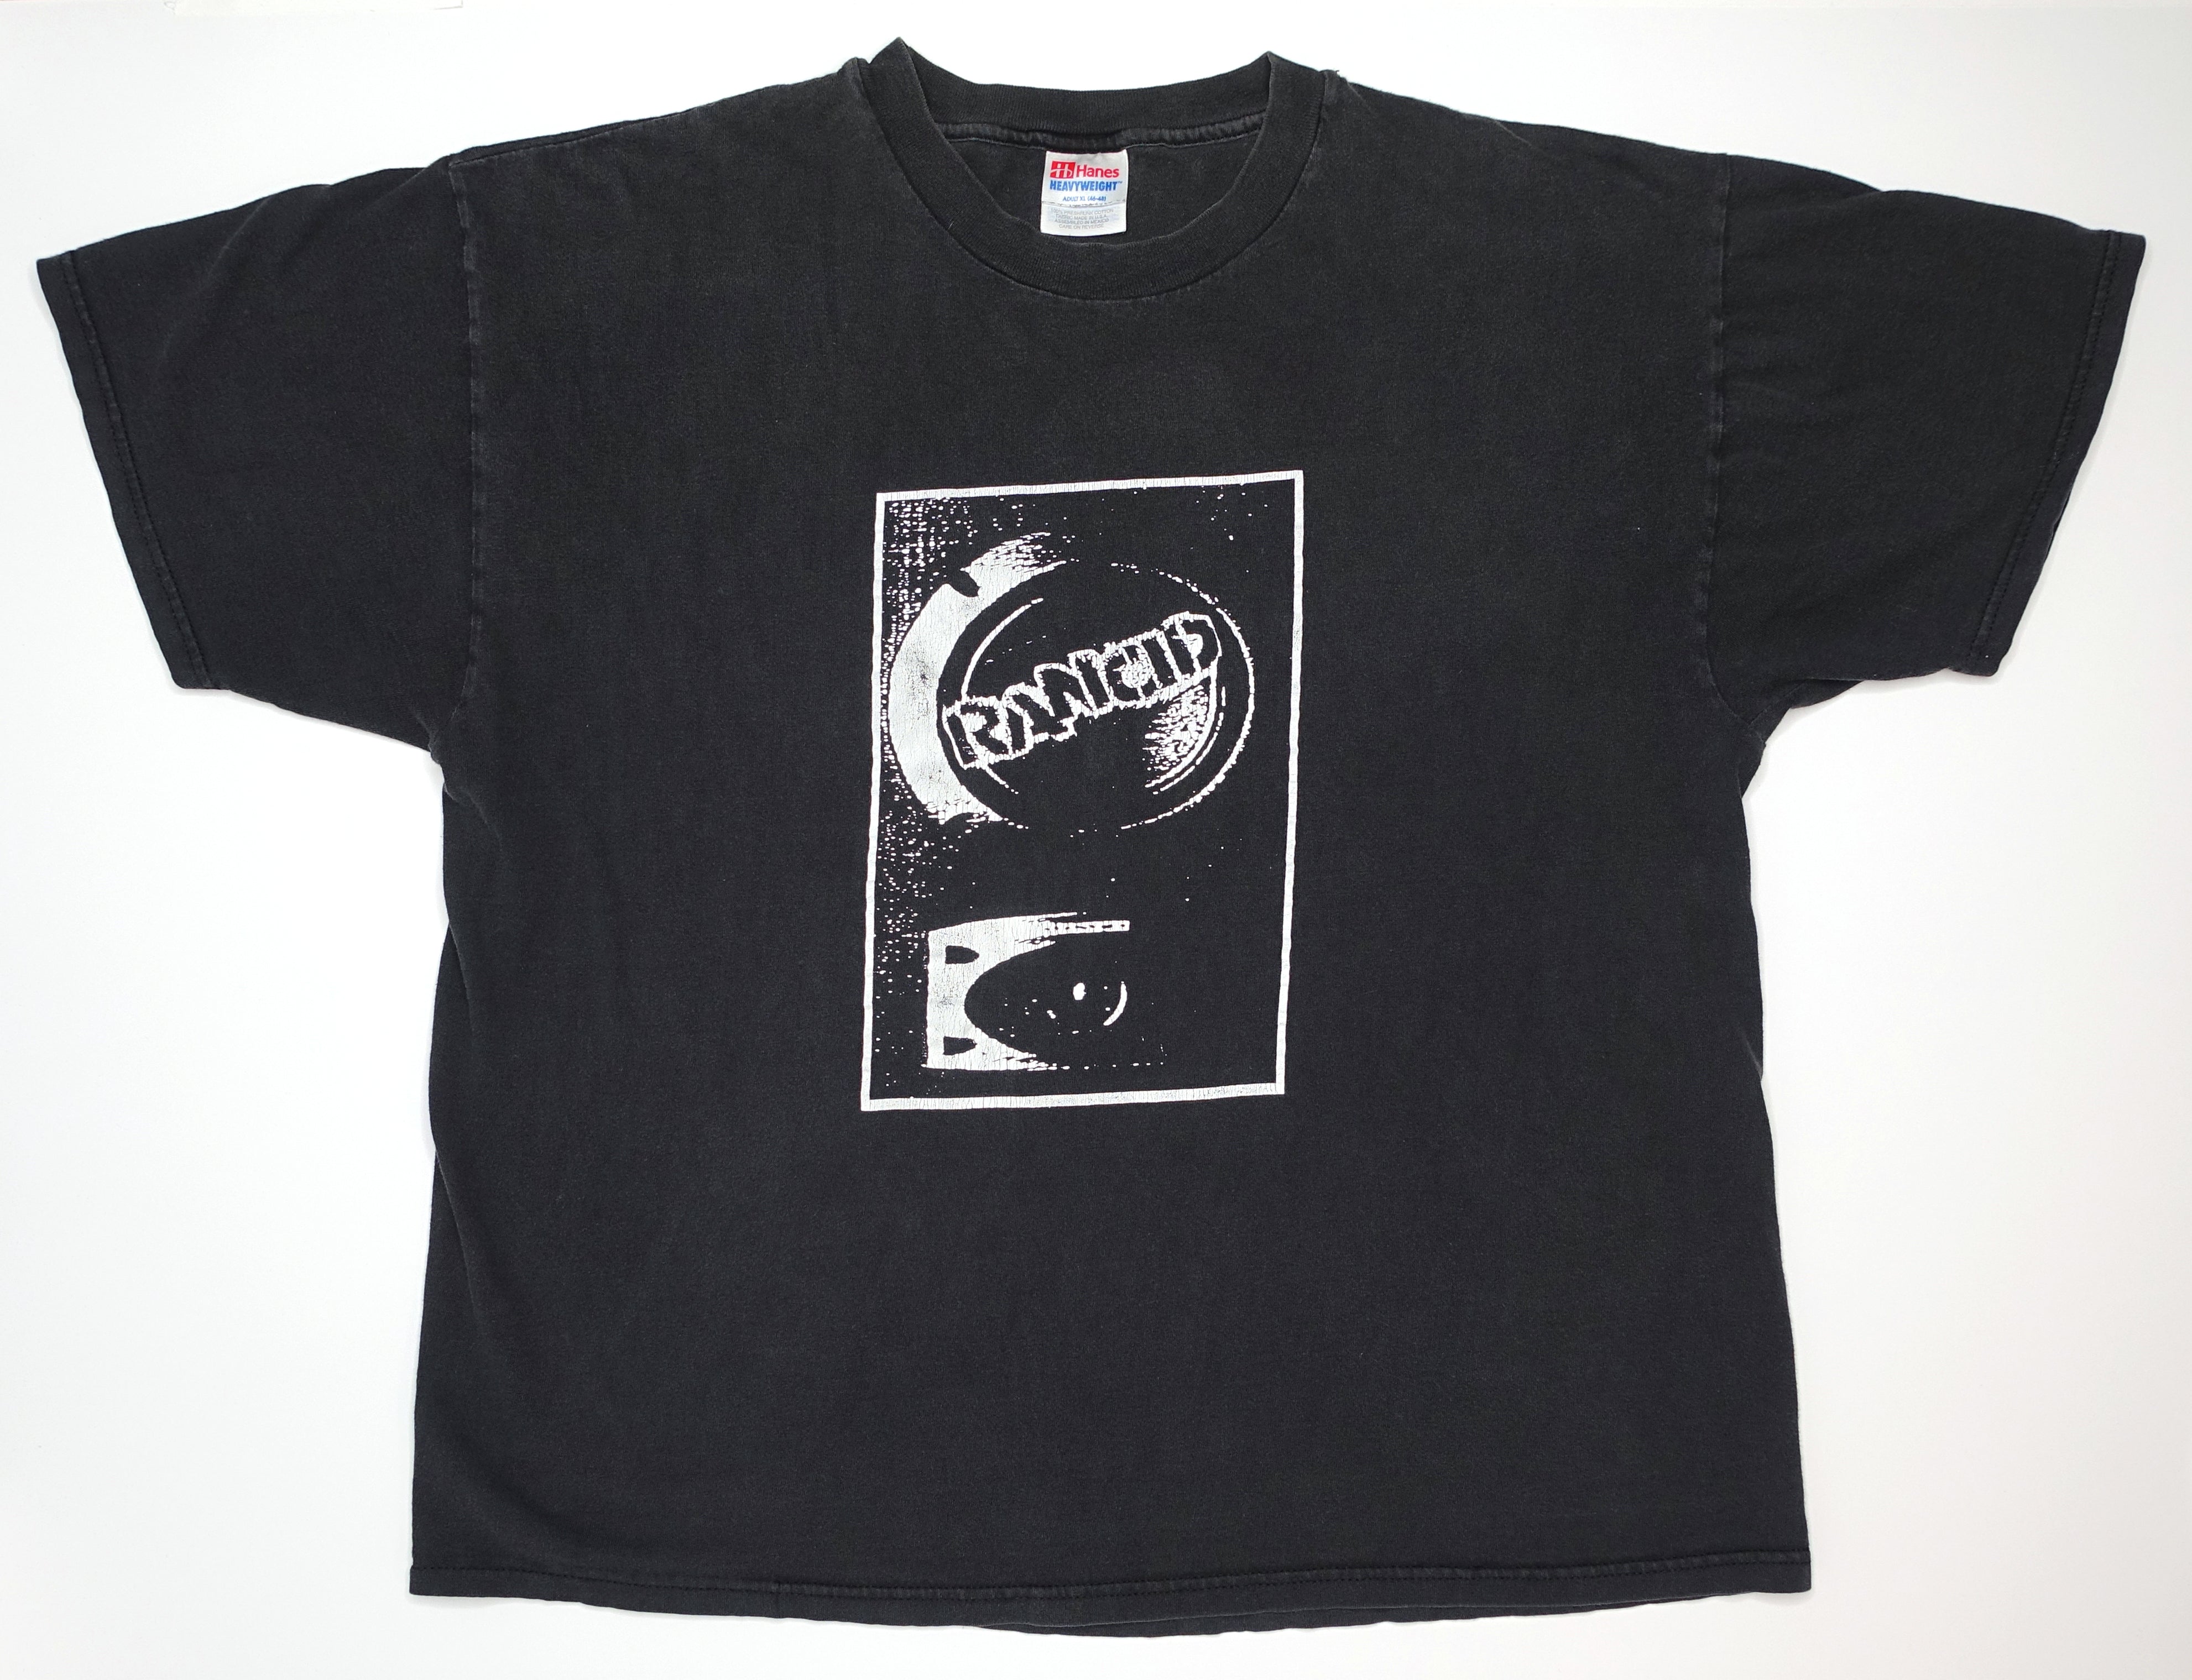 Rancid - Life Wont Wait 1998 Tour Shirt Size XL